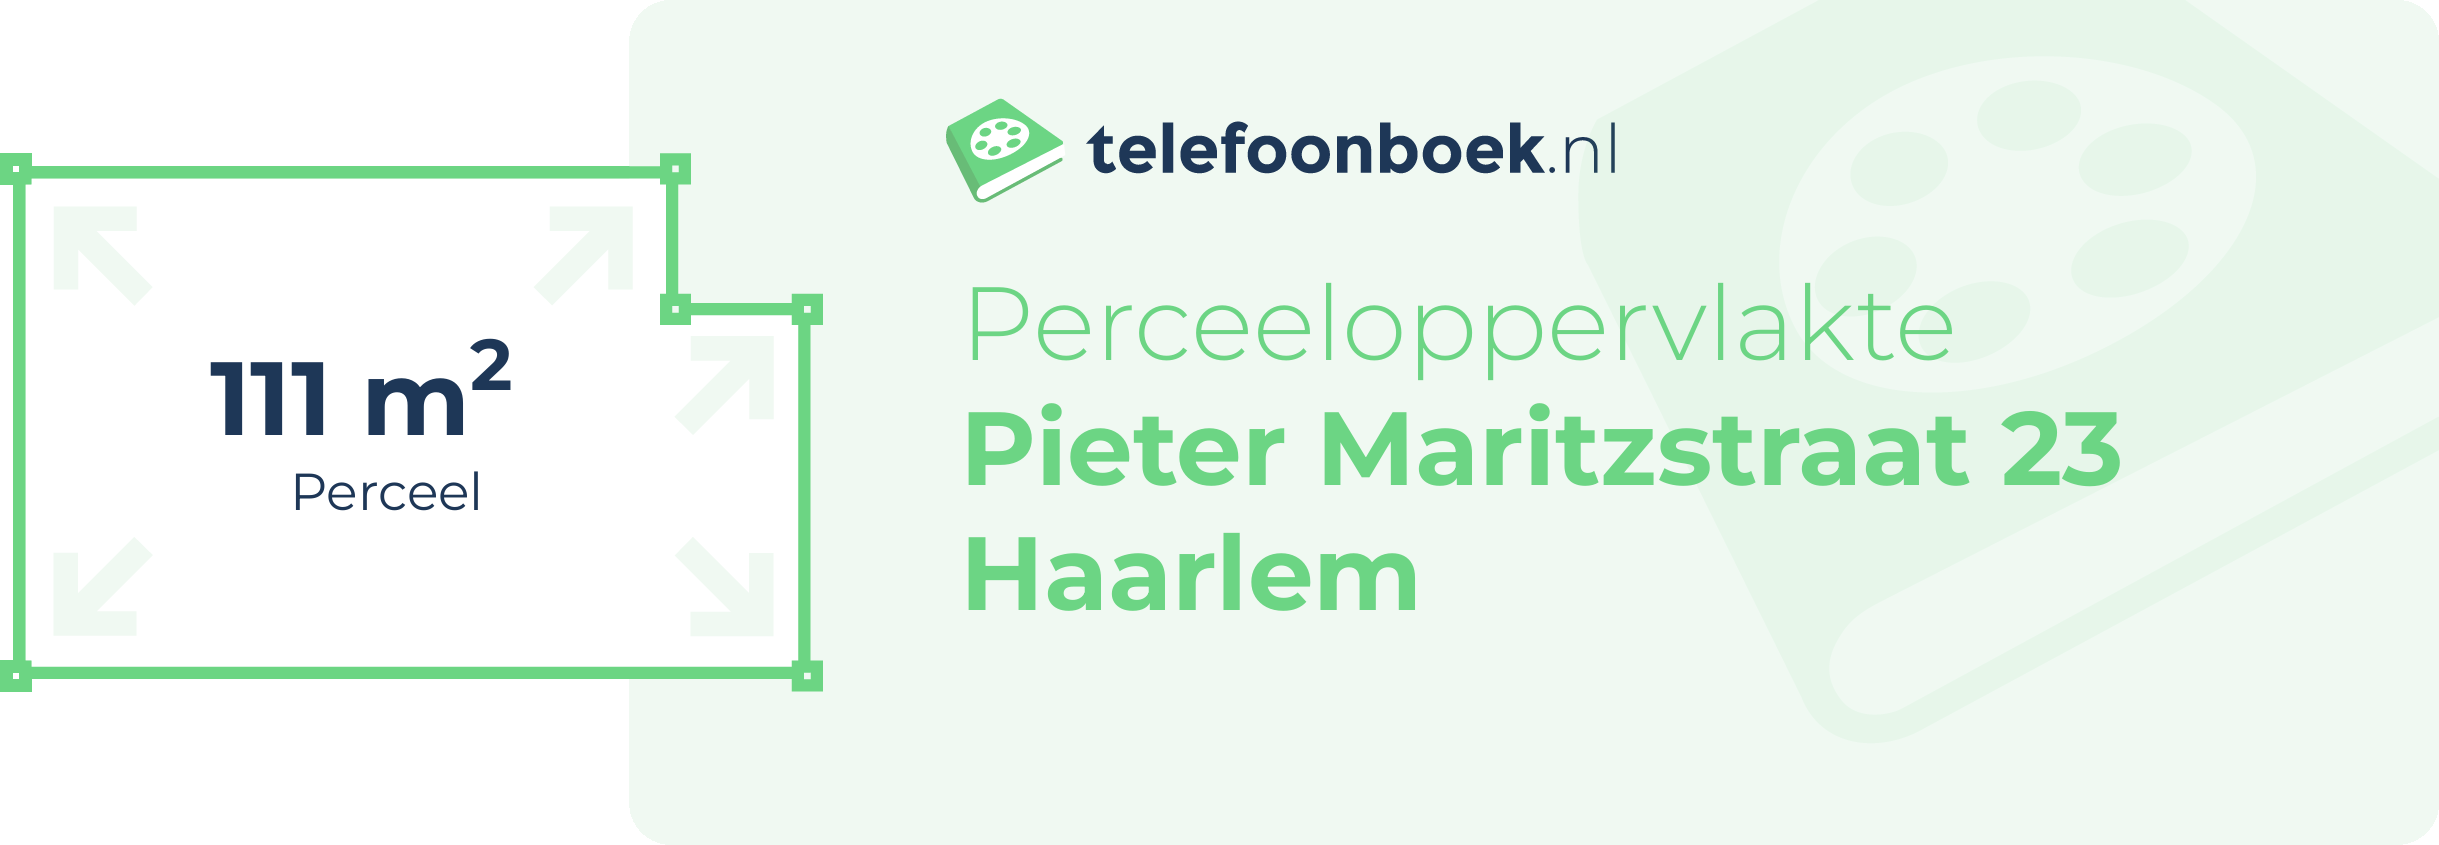 Perceeloppervlakte Pieter Maritzstraat 23 Haarlem